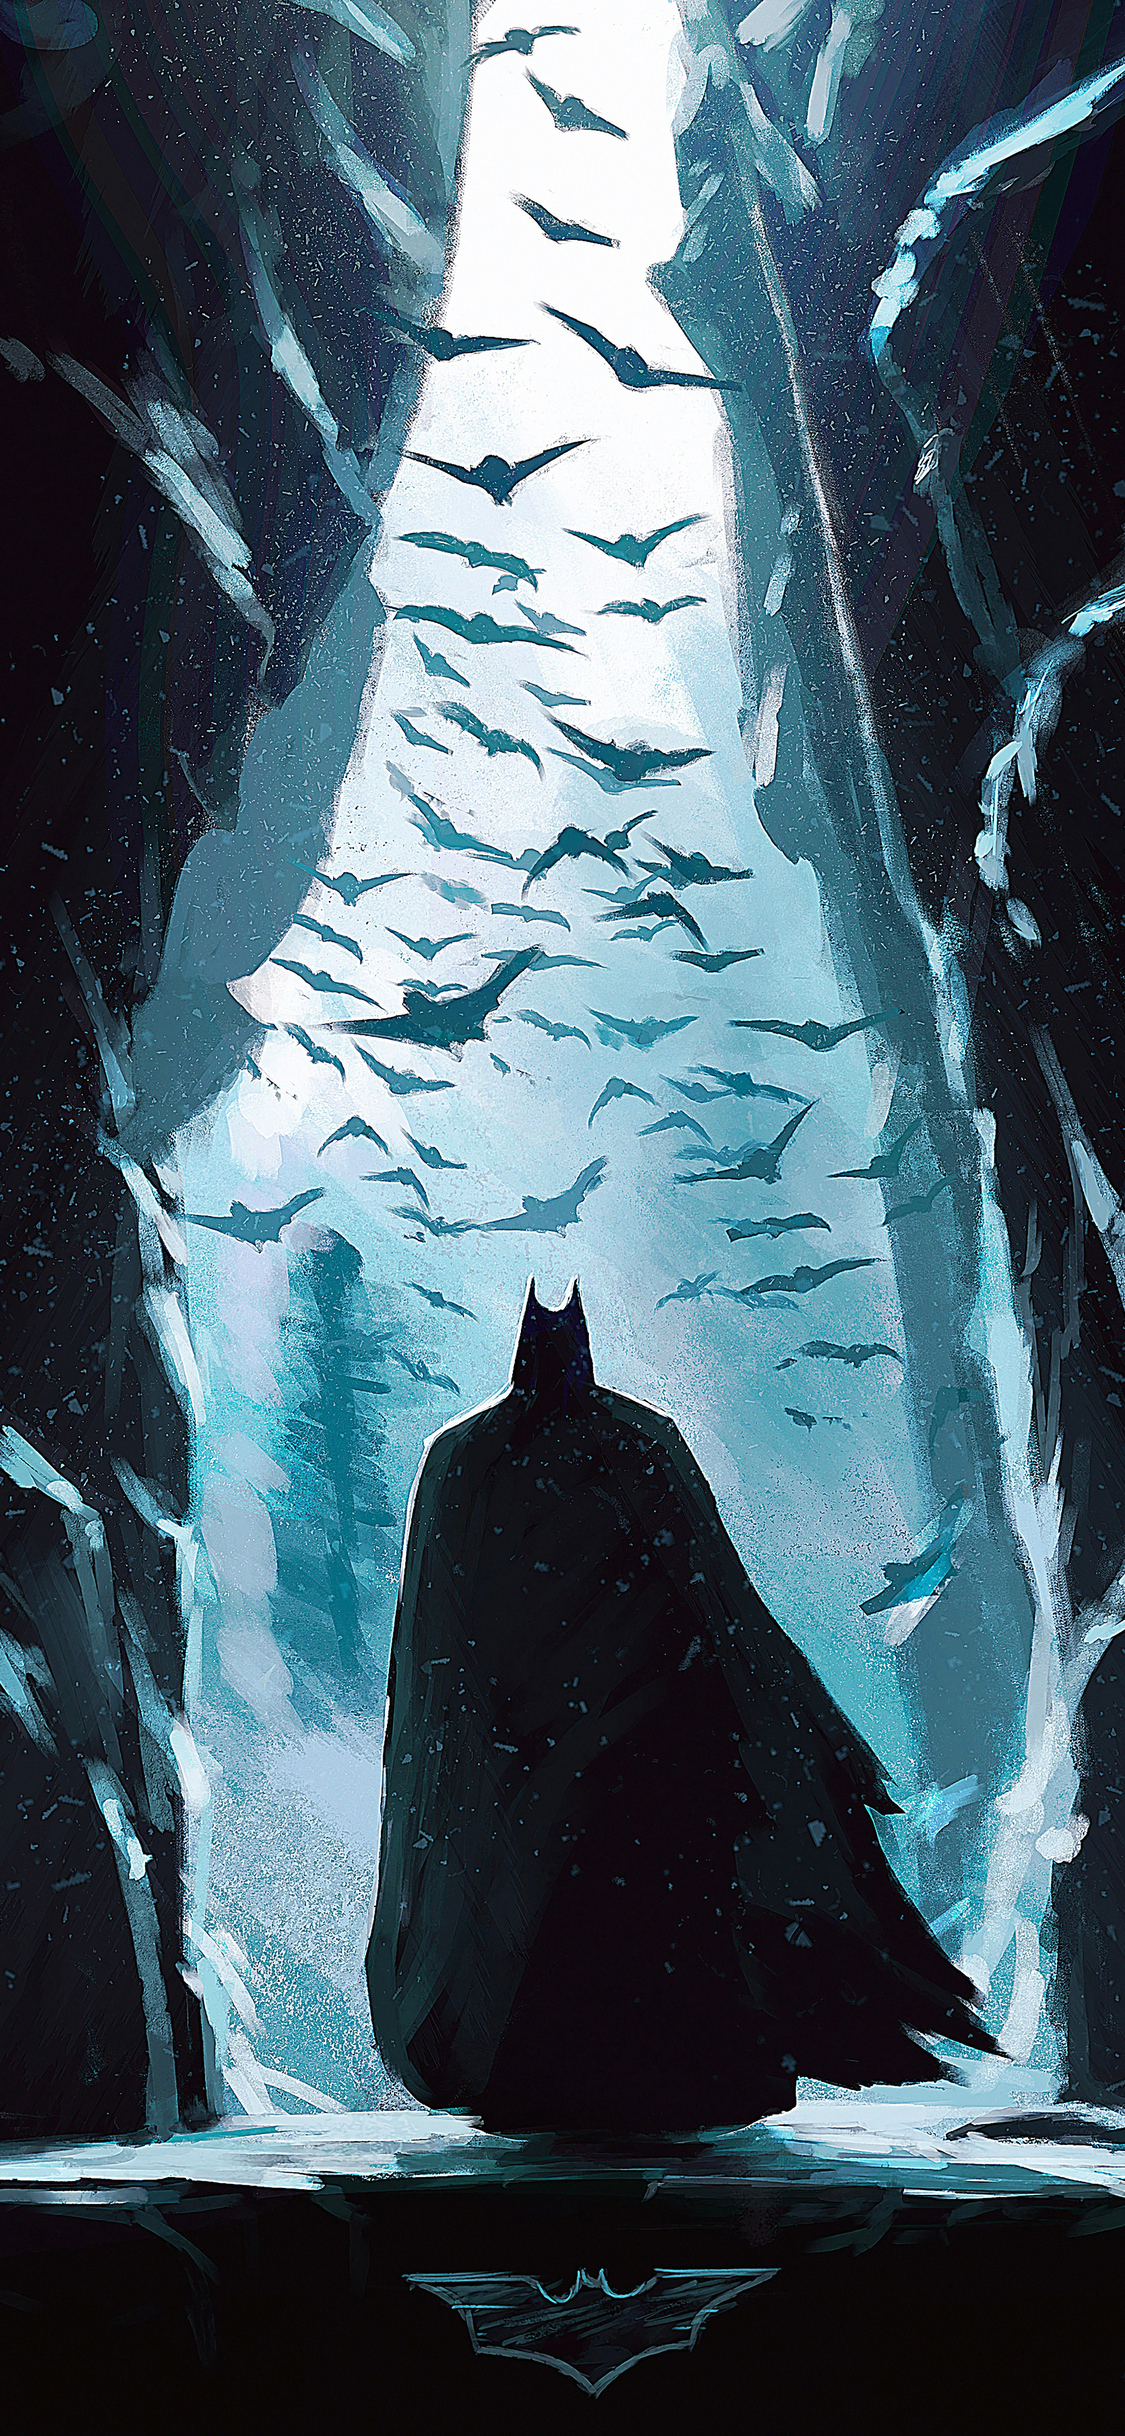 4k Batman For iPhone Wallpapers - Wallpaper Cave